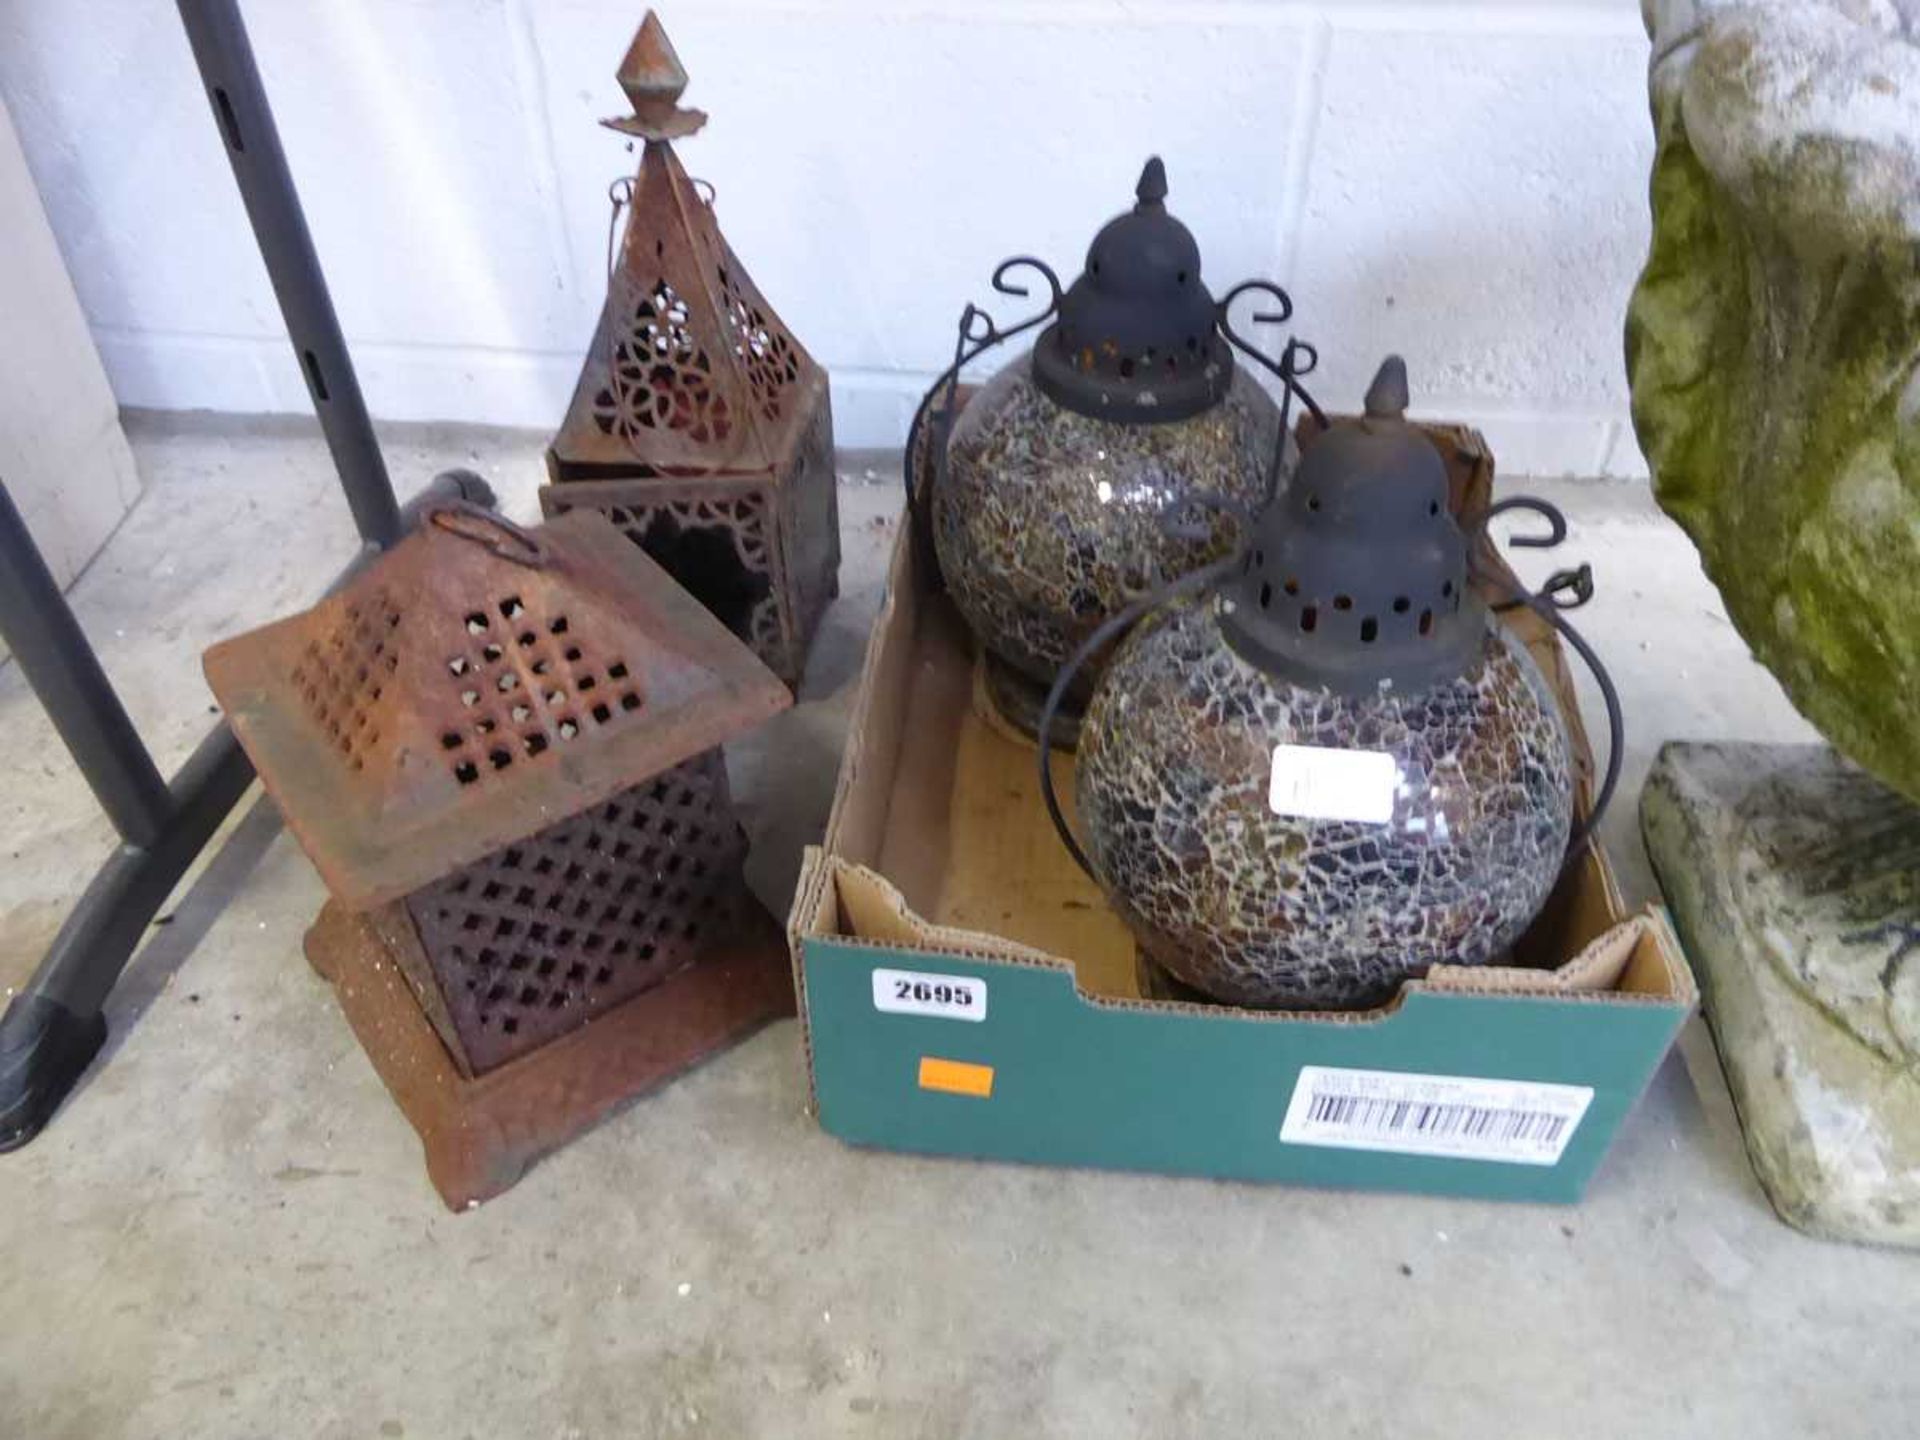 4 decorative metalware garden items incl. Chinese lantern, 2 mosaic glass lanterns and weathered